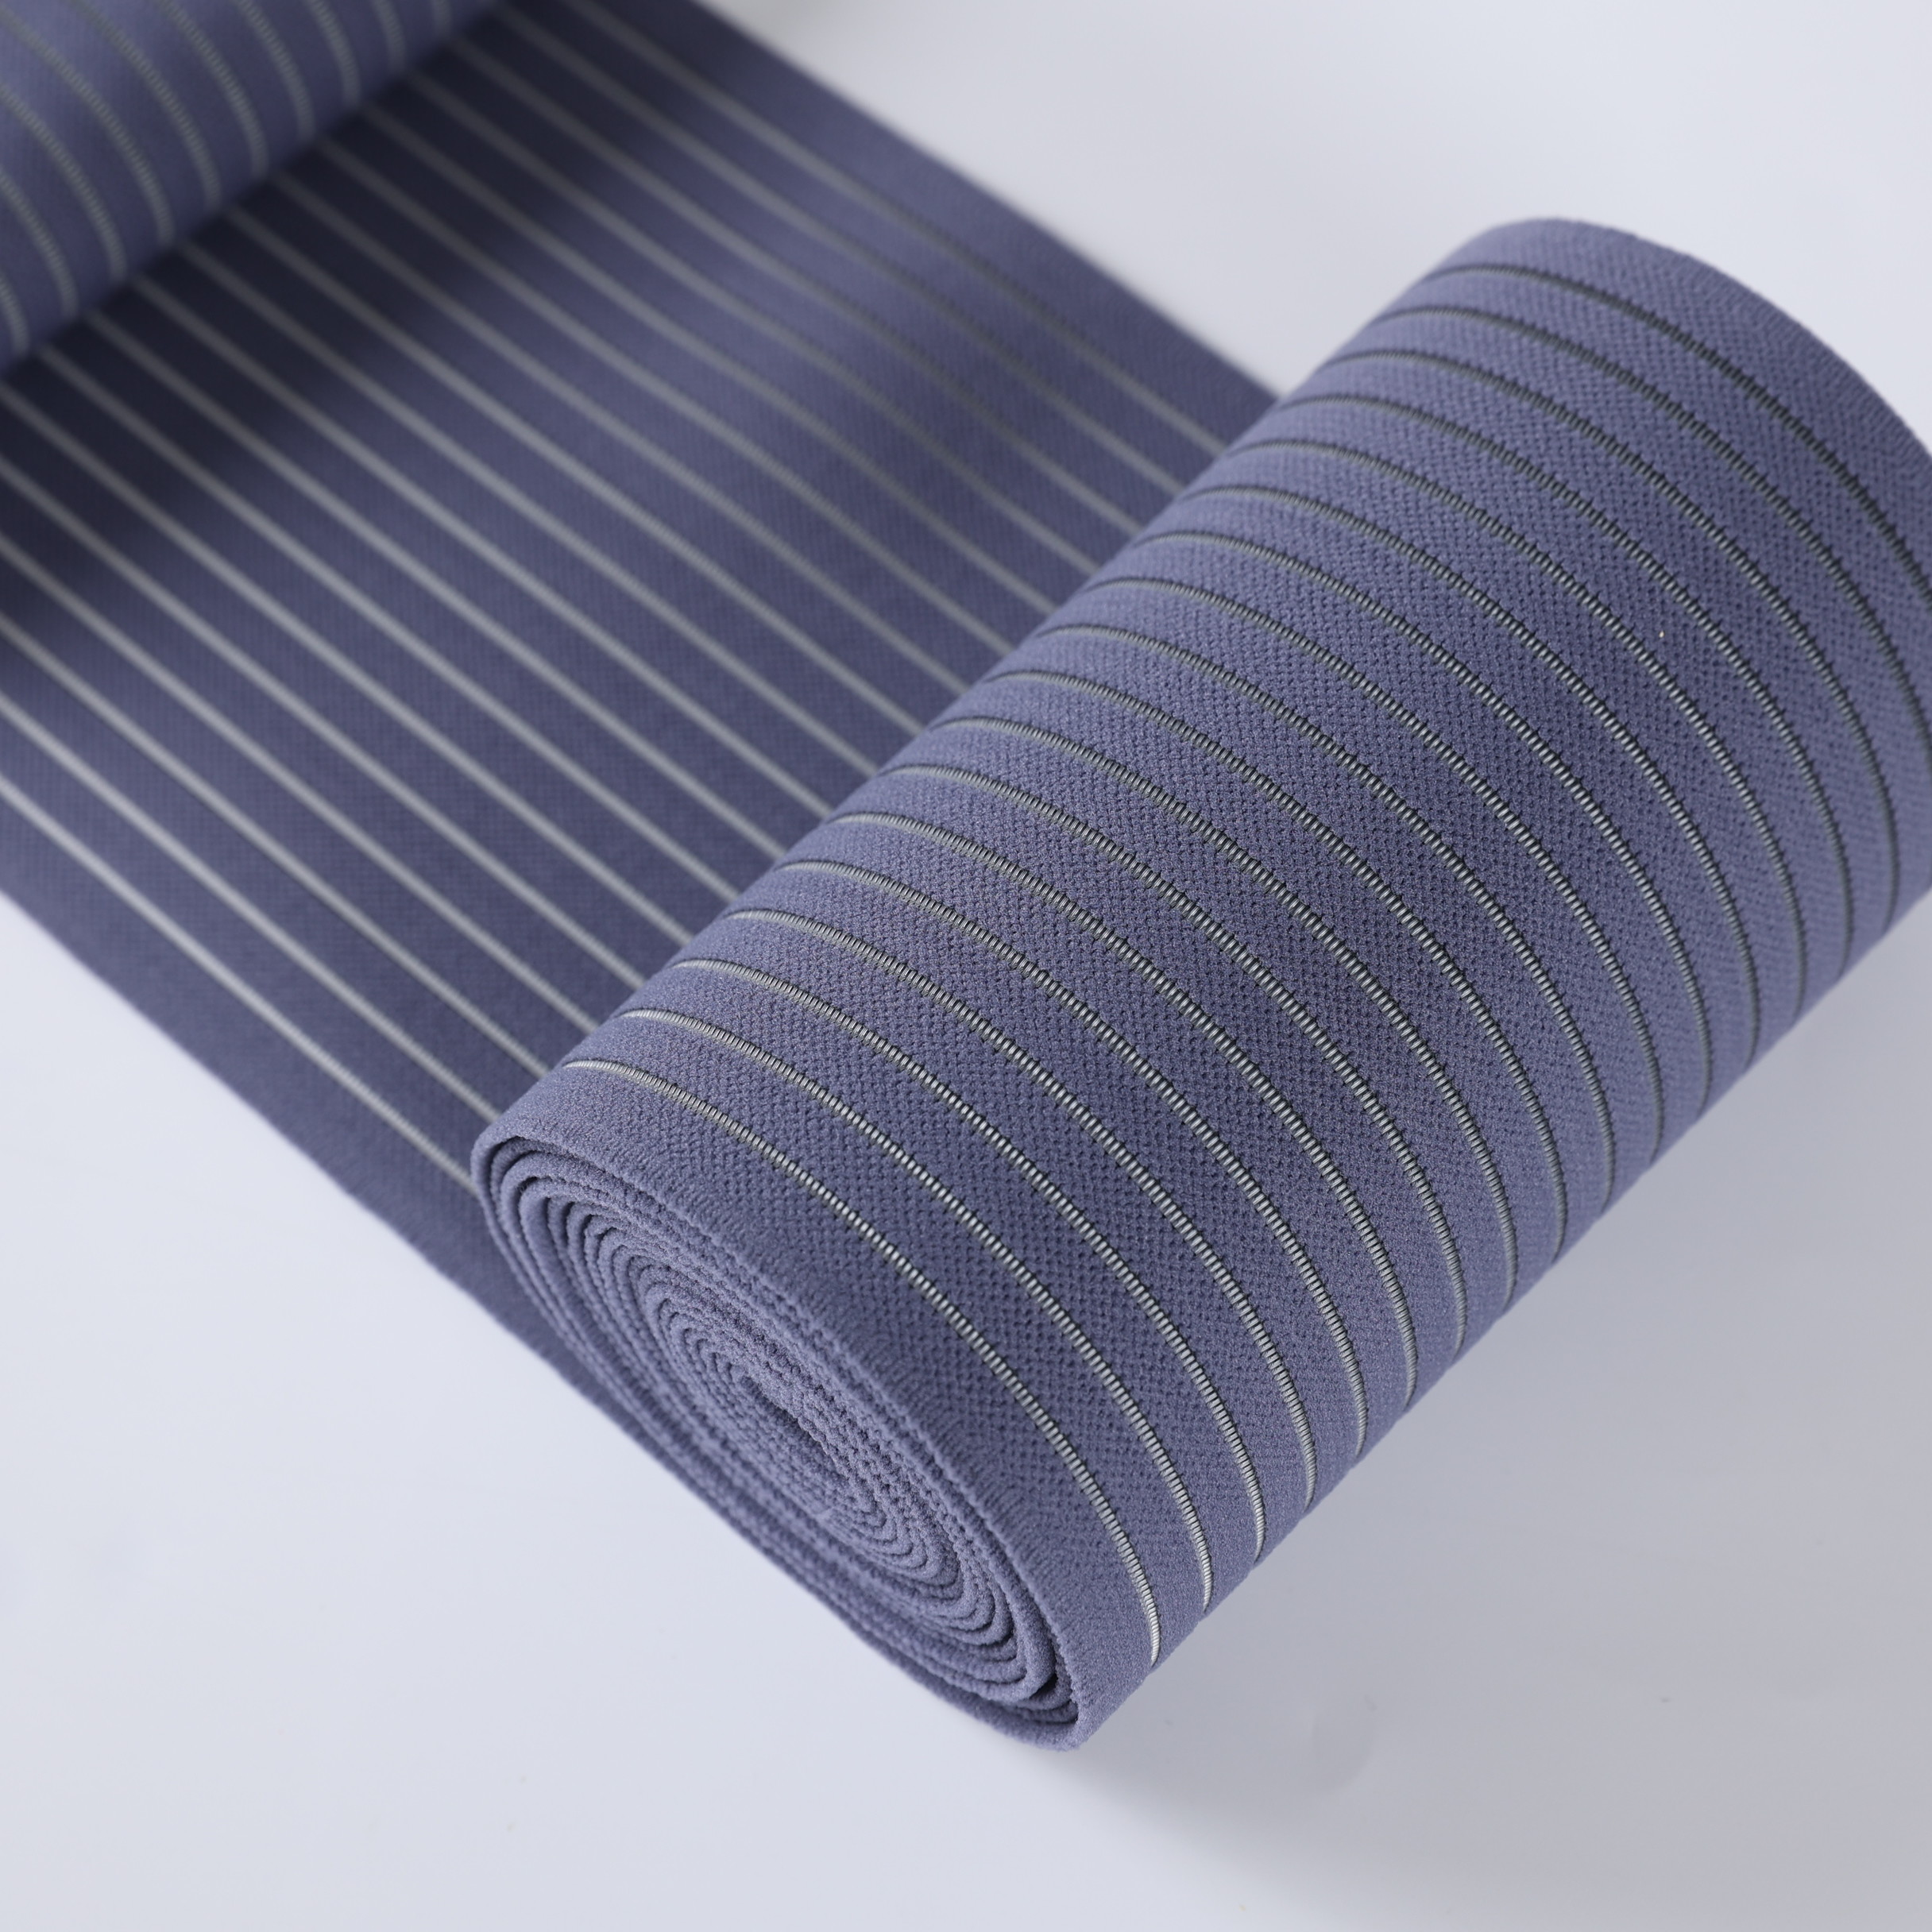 China Verified factory custom medical elastic band fish silk elastic webbing tape for waist back support belt factory